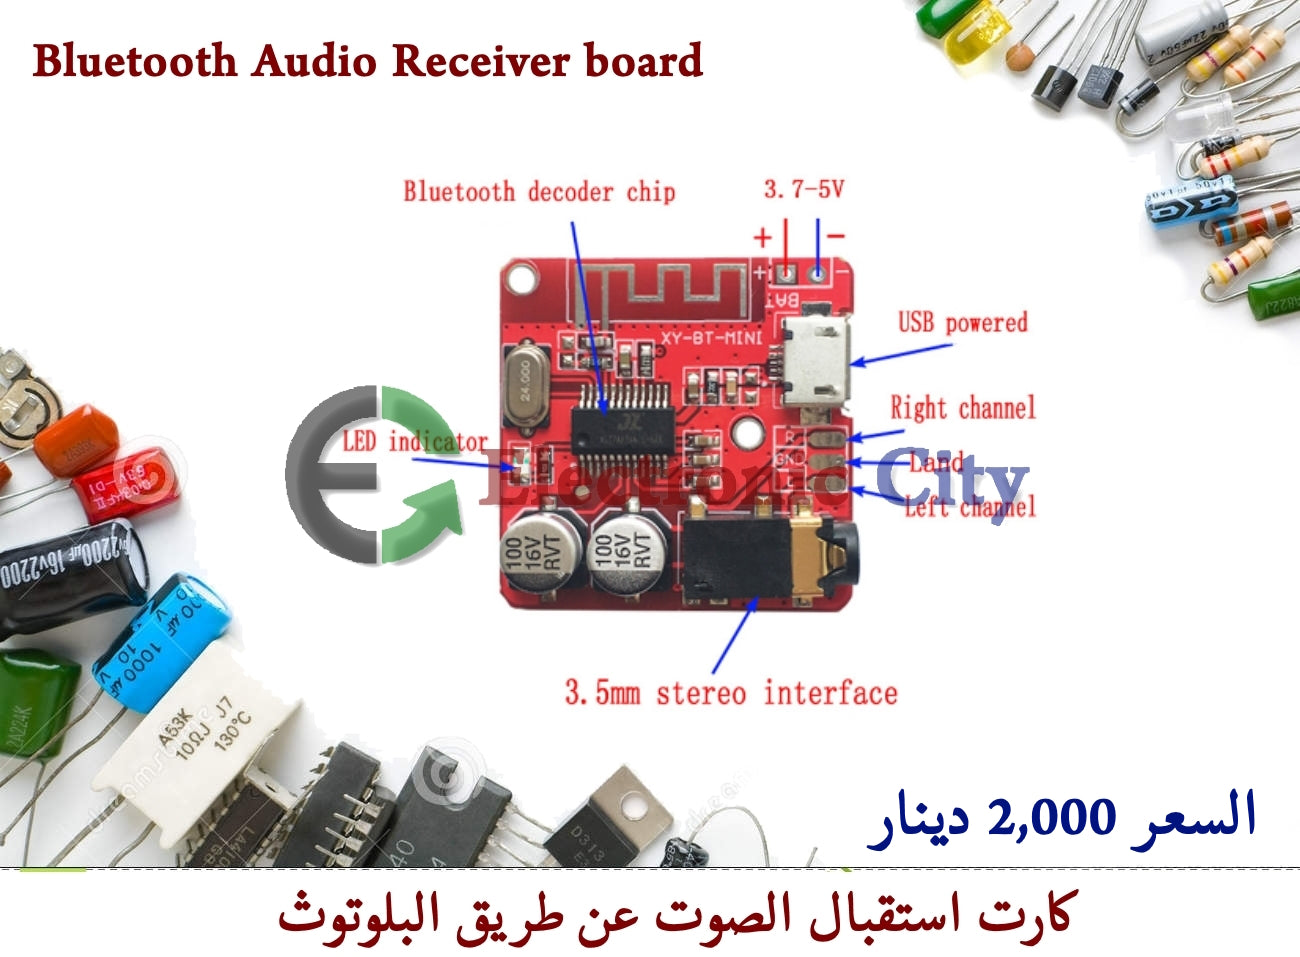 Bluetooth Audio Receiver board #L9 012704